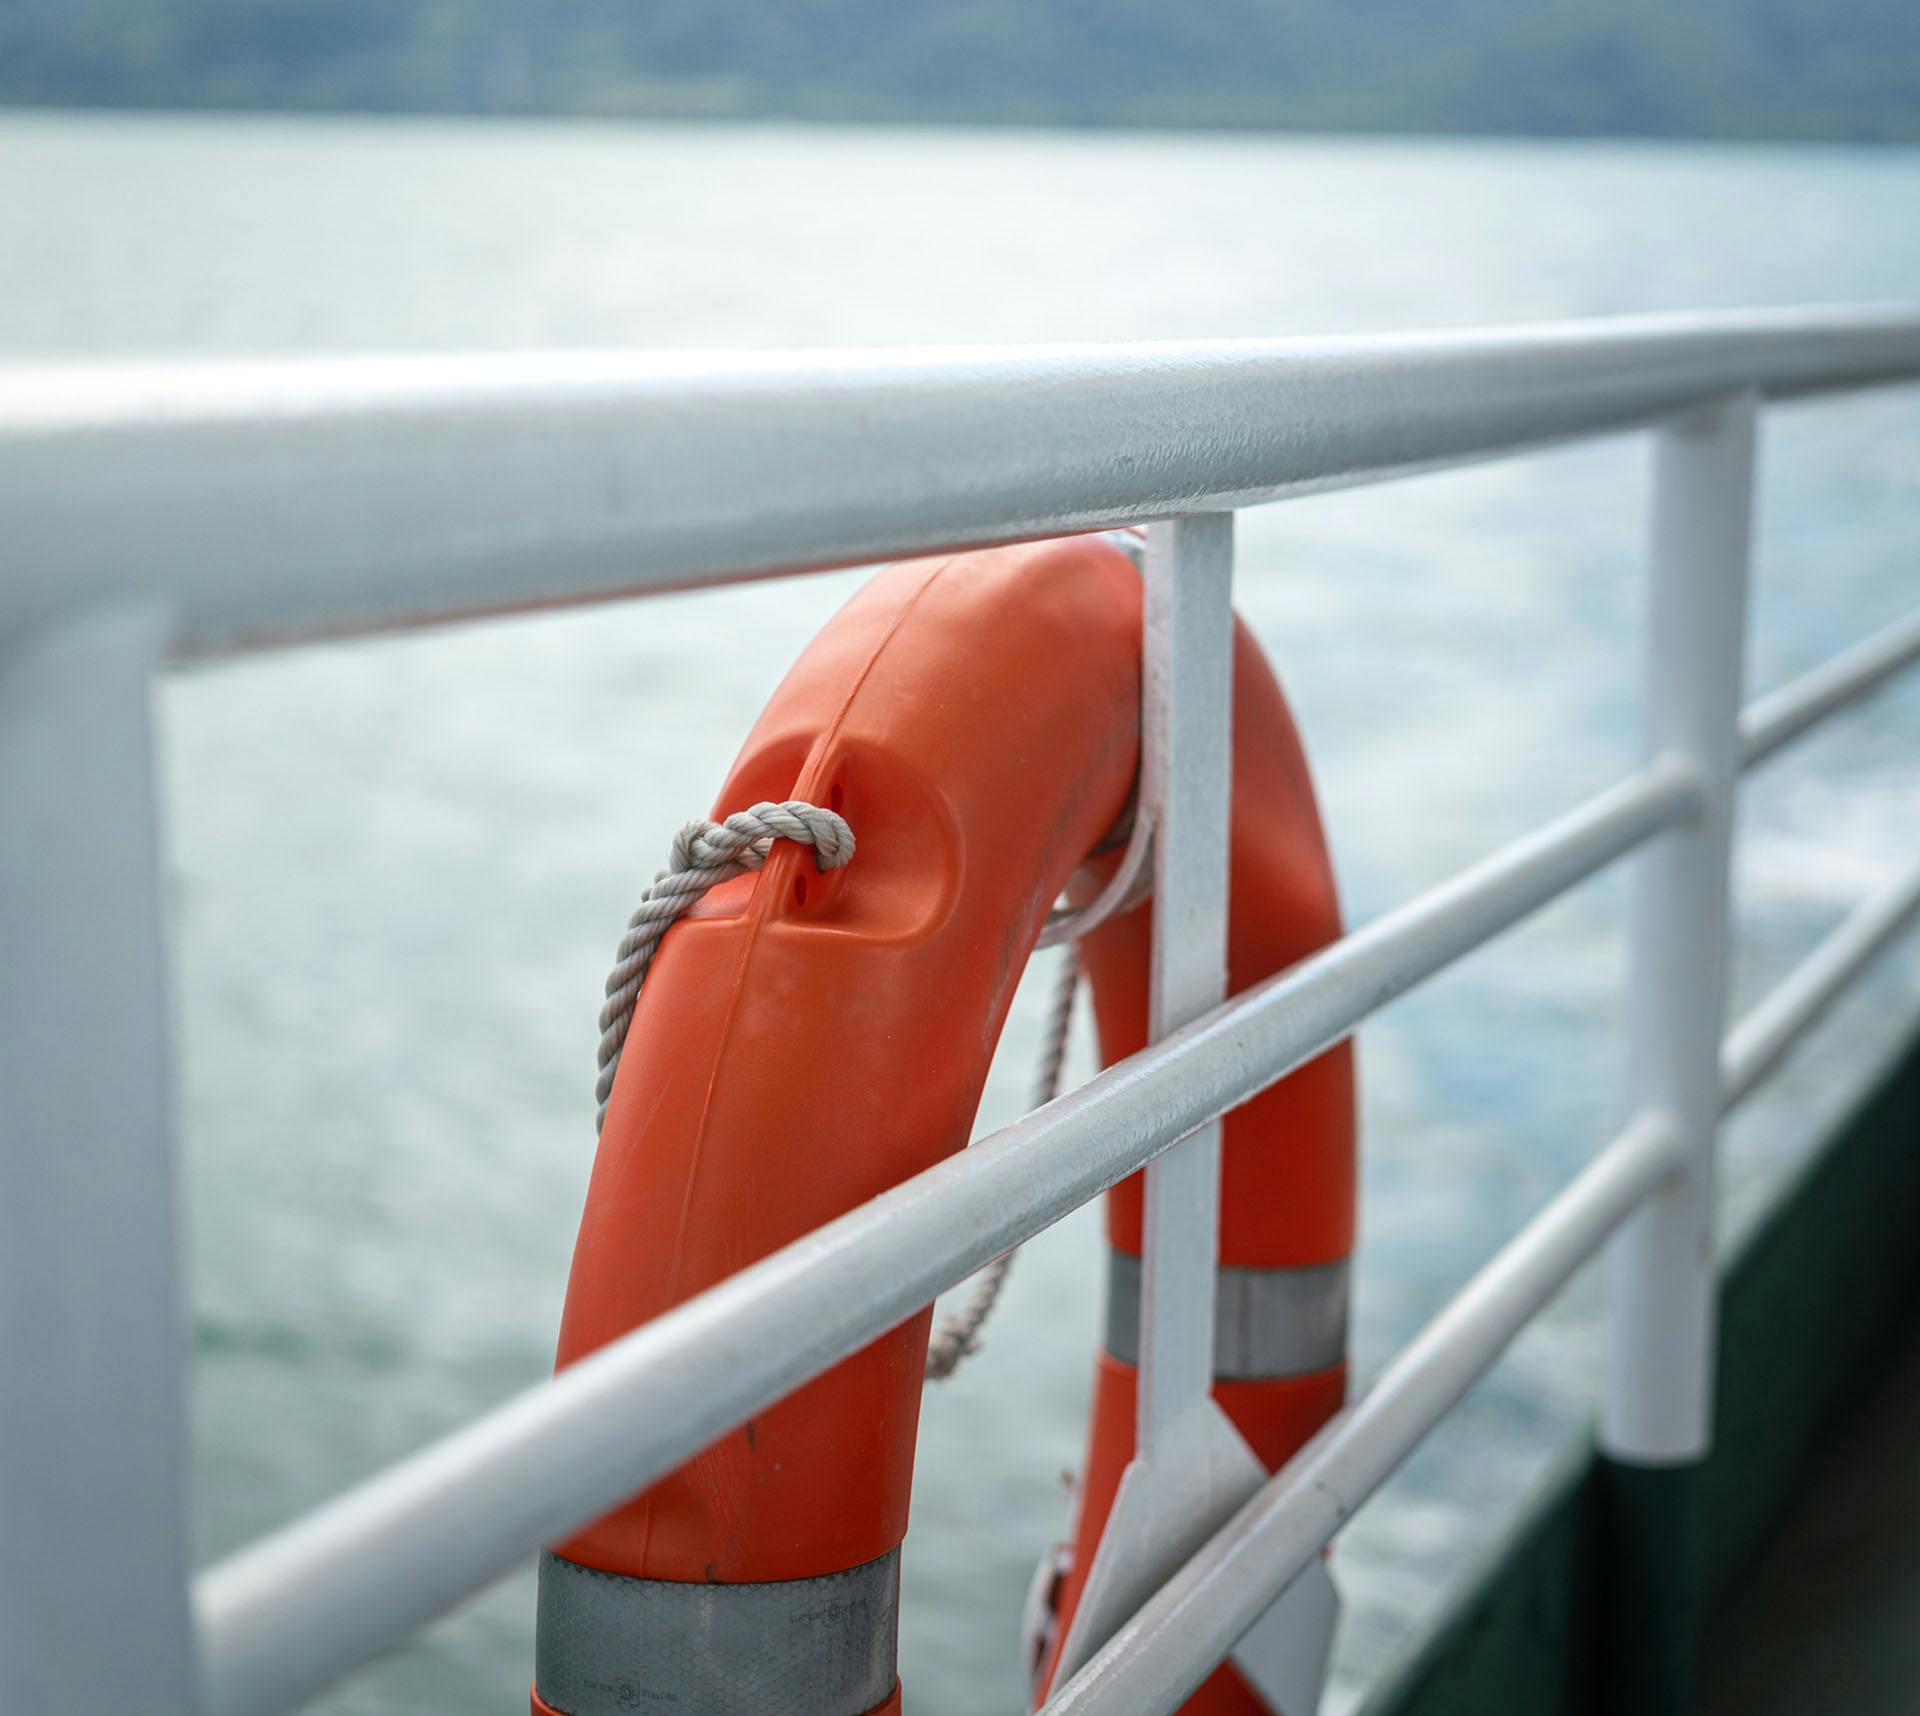 A ring buoy on a ship